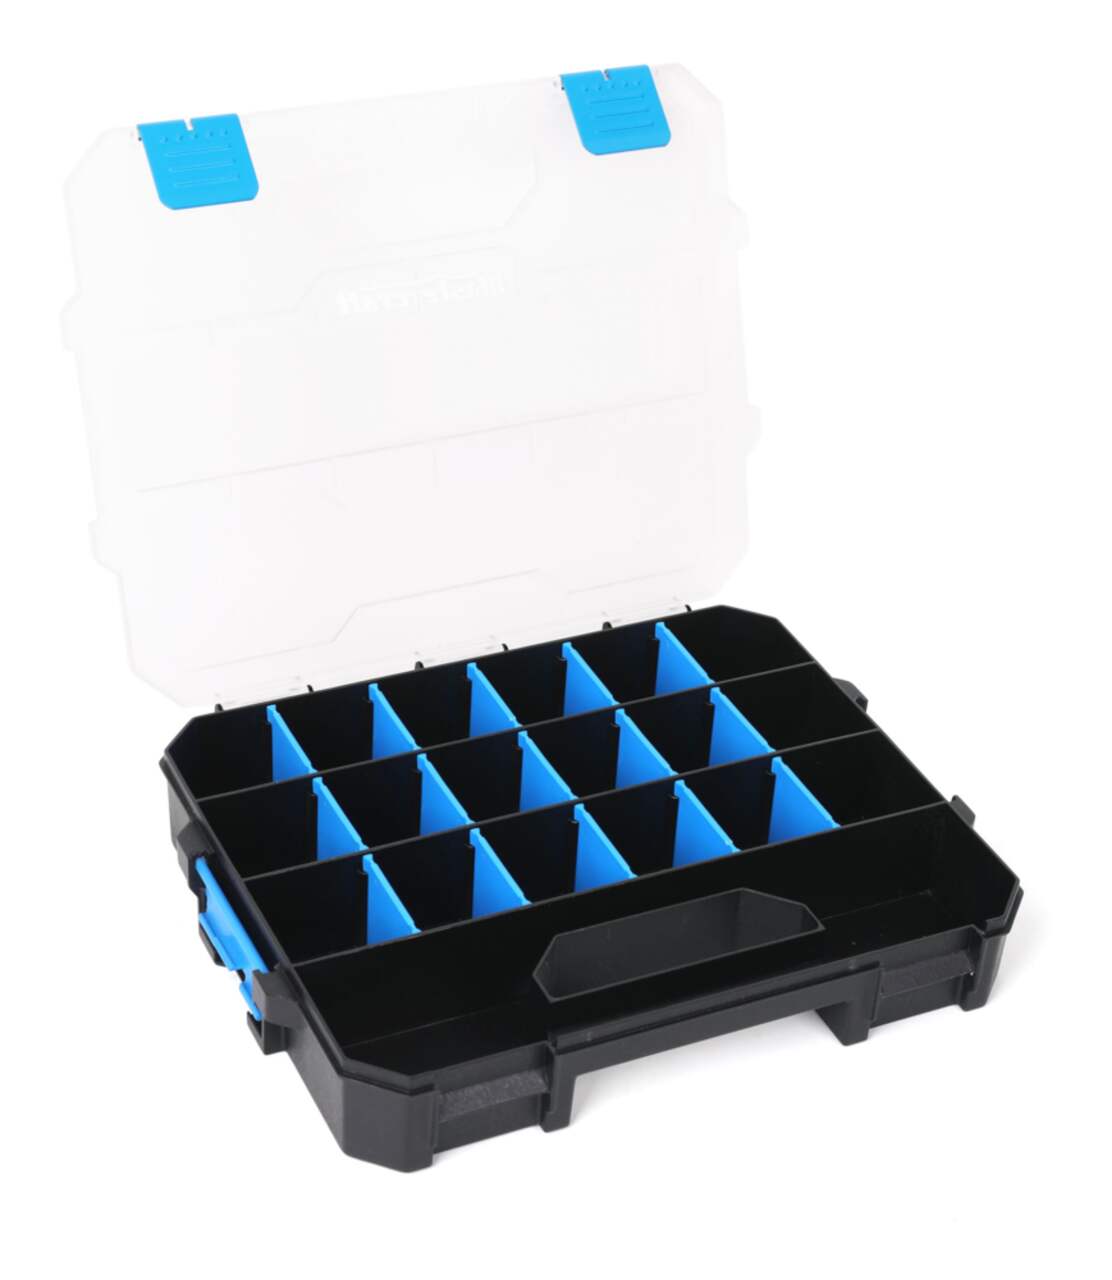 Mastercraft Portable Stackable Small Parts 18-Bins Organizer Tray